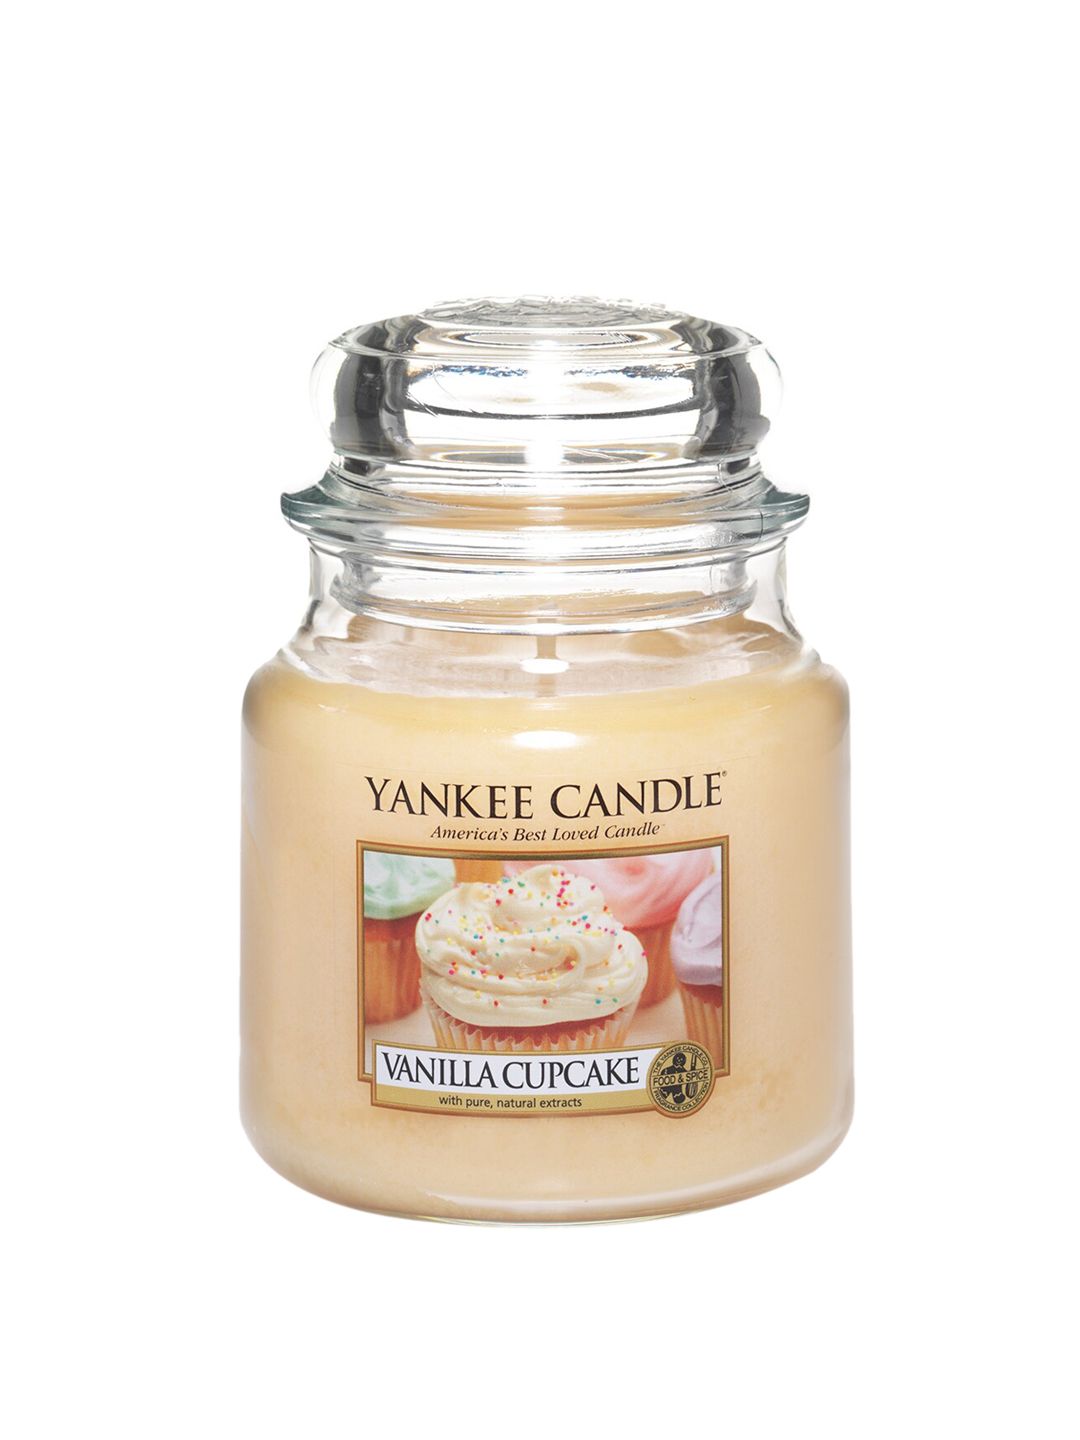 YANKEE CANDLE Cream Coloured Classic Medium Jar Vanilla Cupcake Scented Candle Price in India